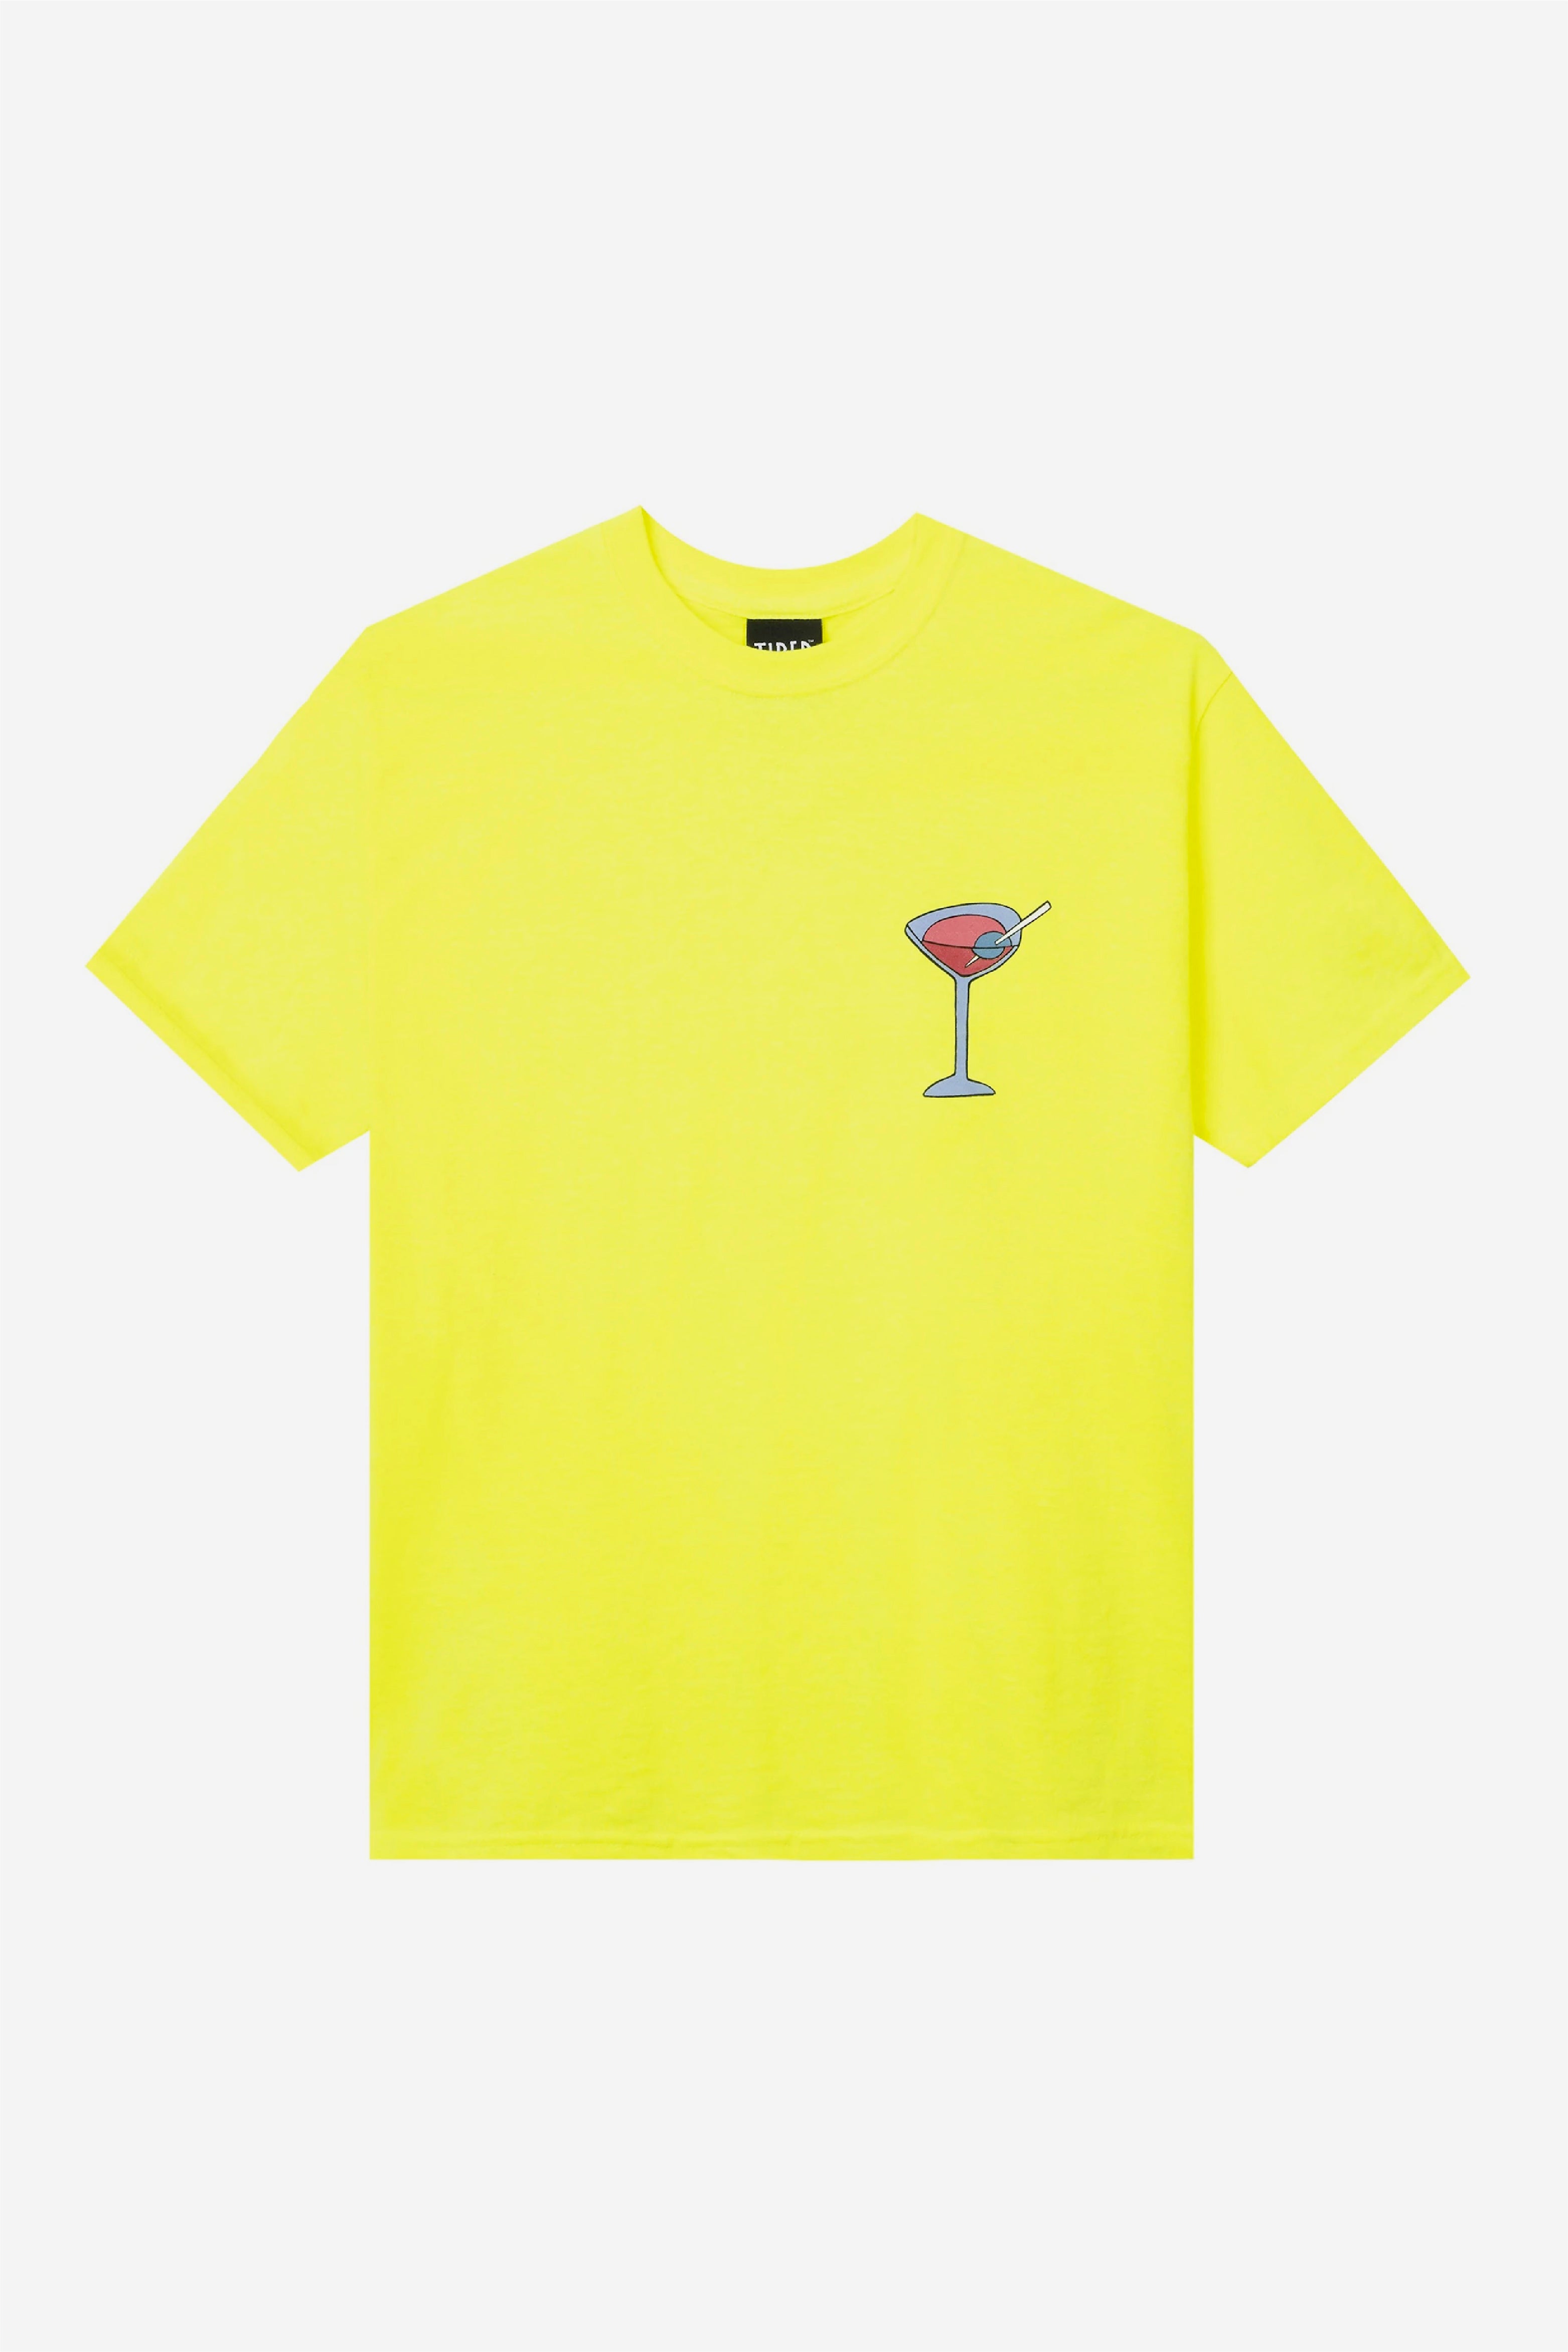 Selectshop FRAME - TIRED Dirty Martini Tee T-Shirts Dubai